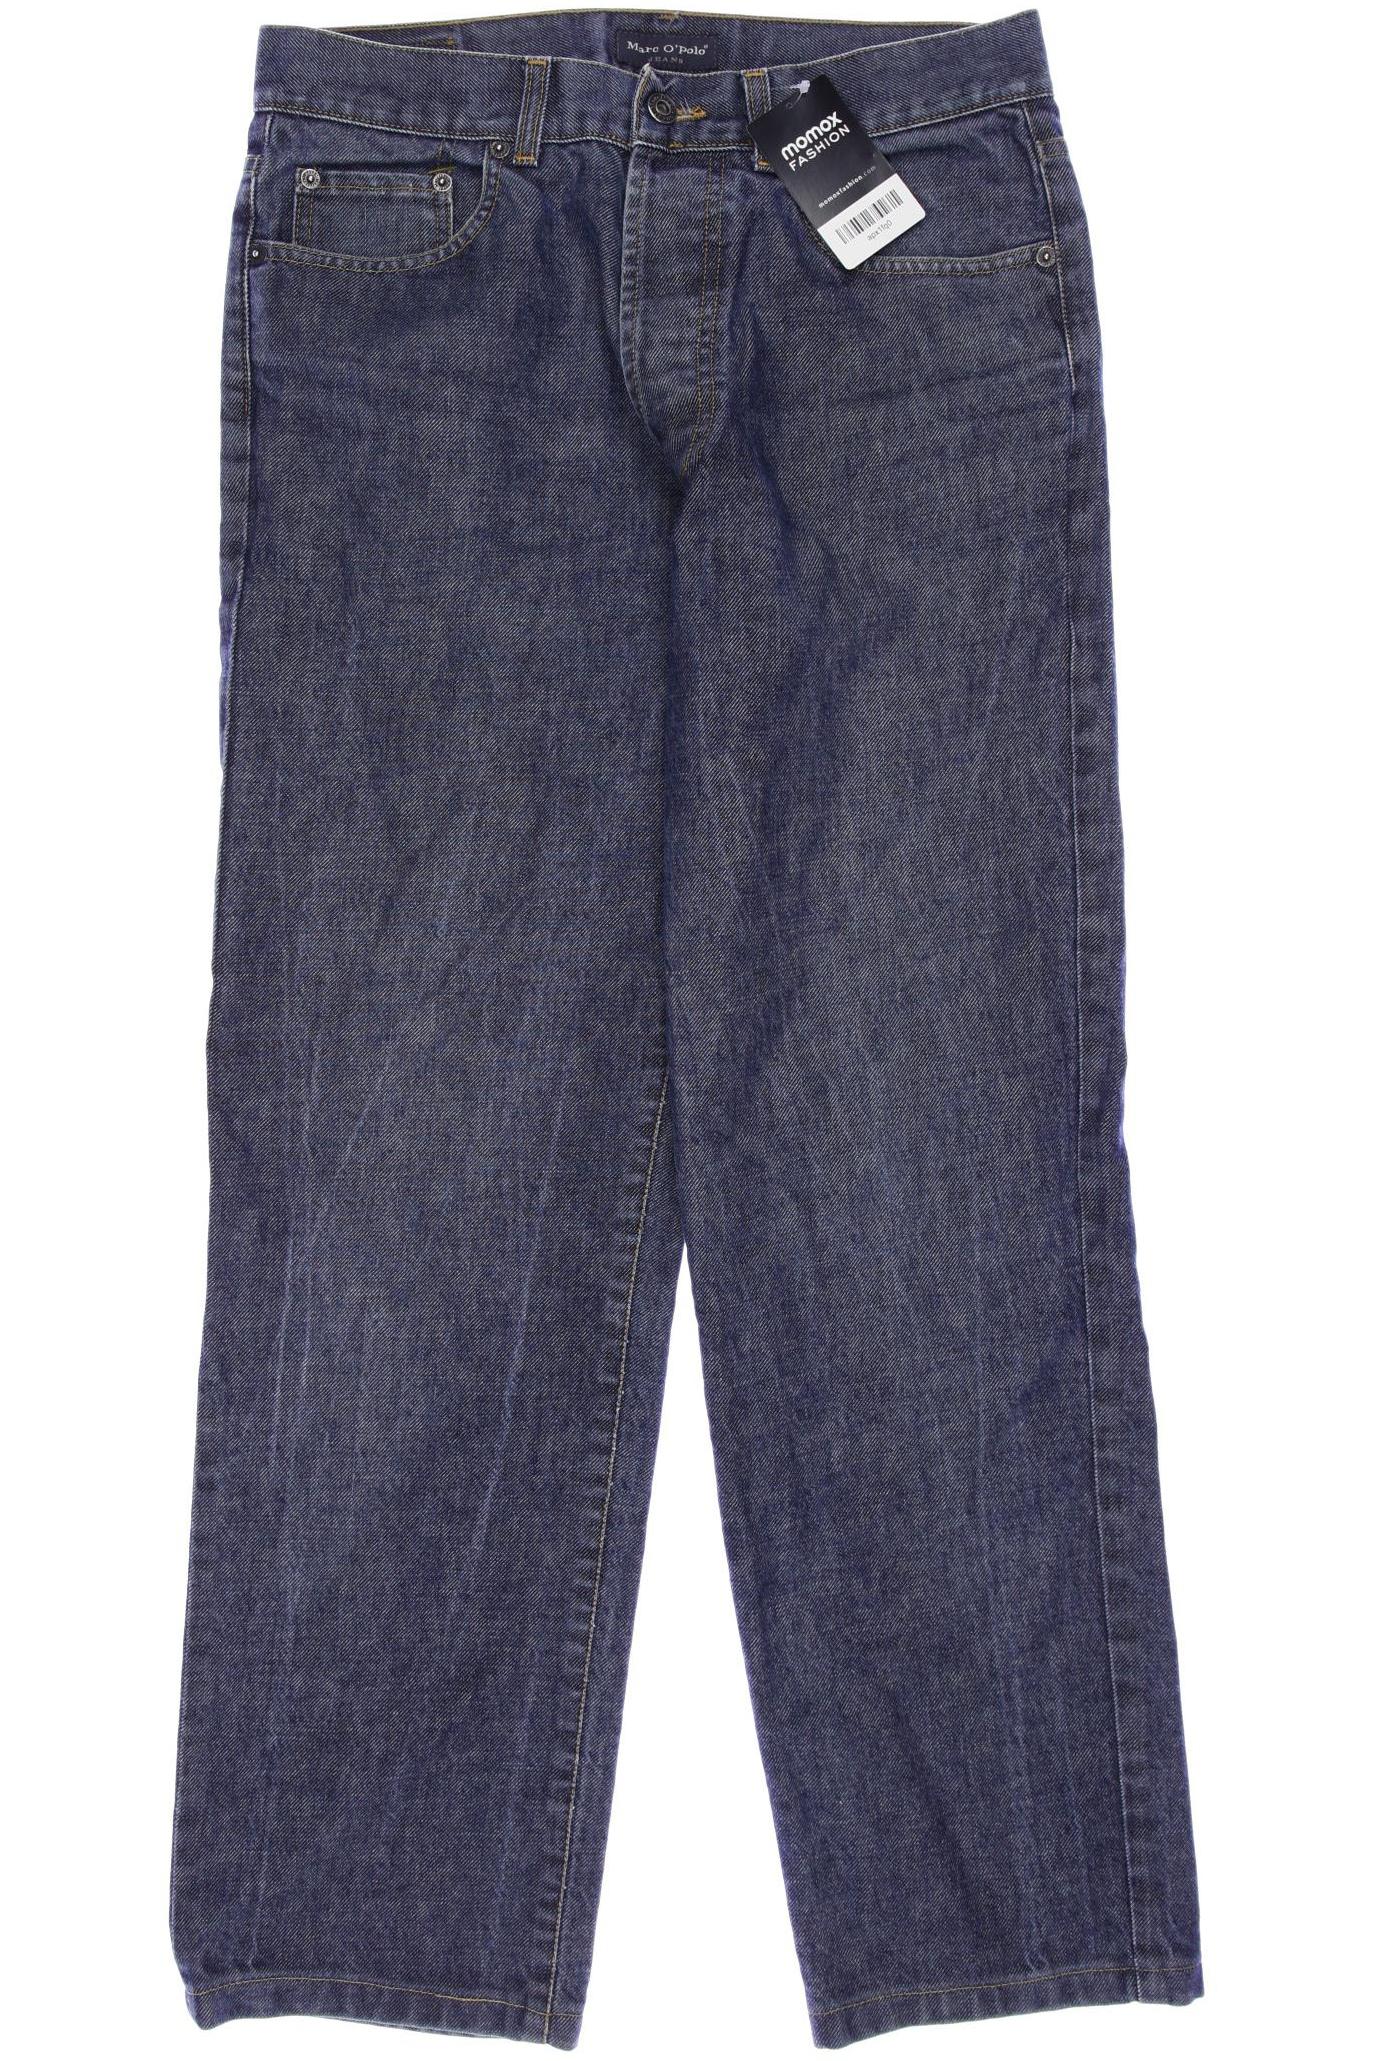 Marc O Polo Herren Jeans, blau, Gr. 50 von Marc O Polo